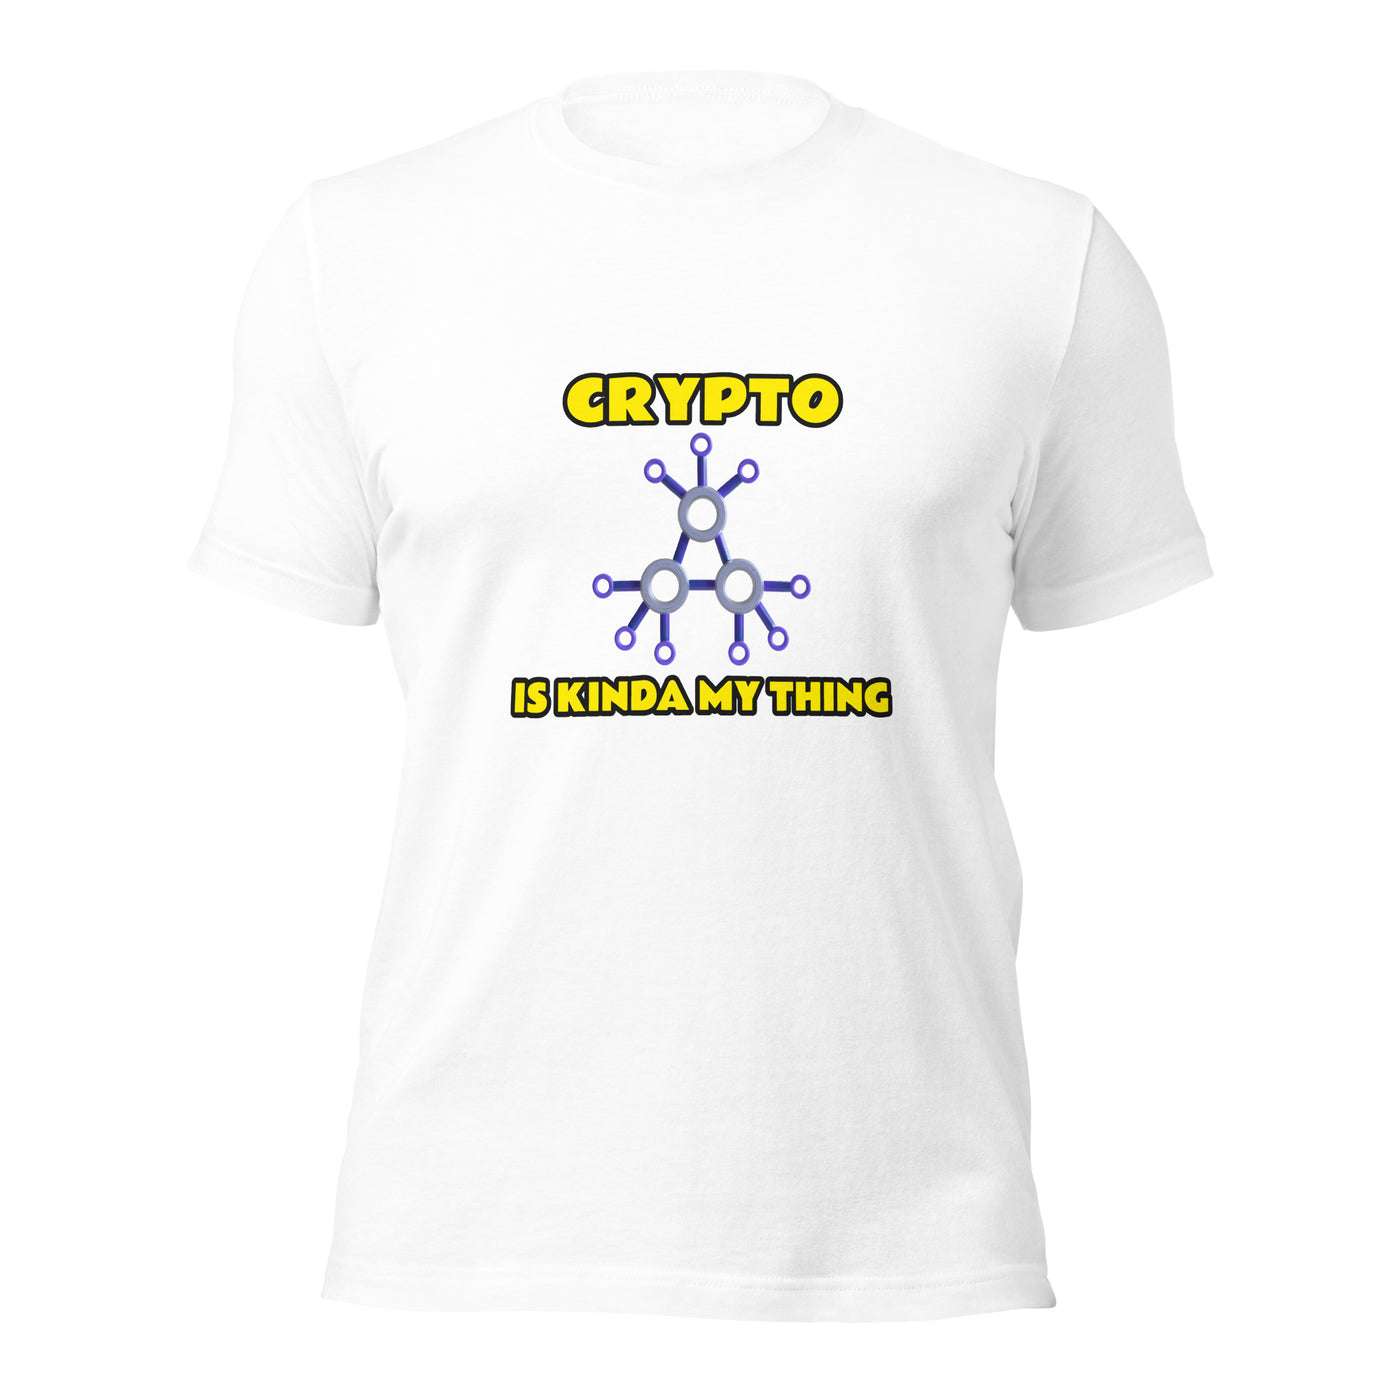 Crypto is Kinda My Thing V3 - Unisex t-shirt